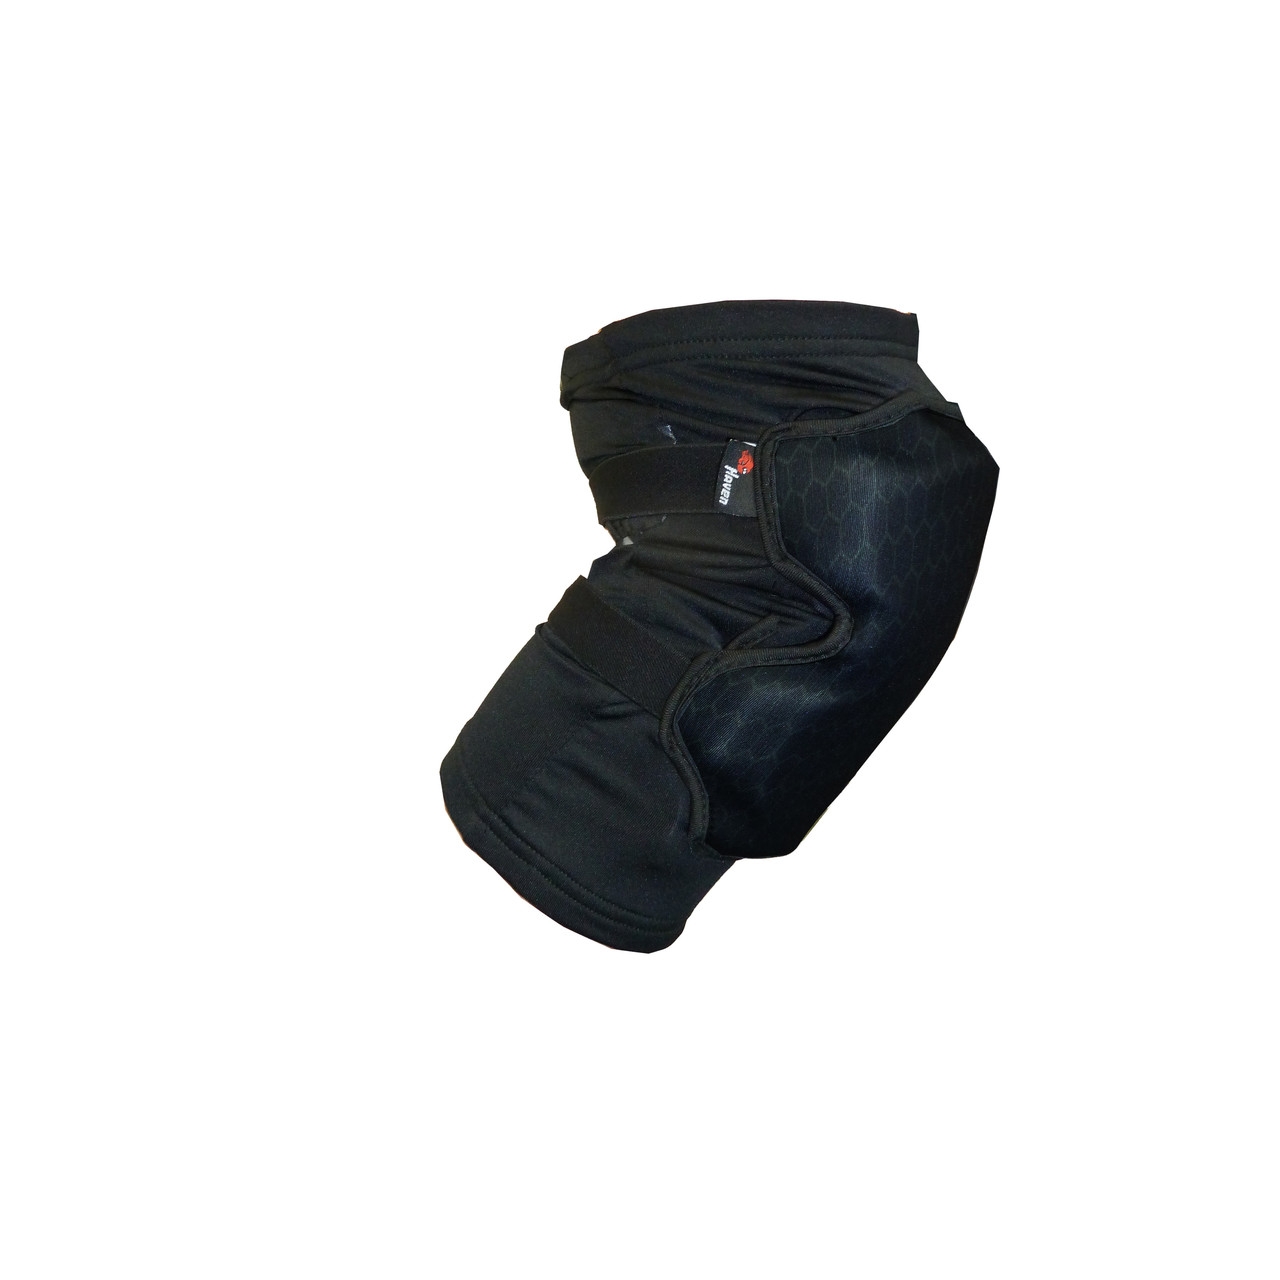 Chrániče kolen Haven Guardian Knee II - černé, XL/XXL